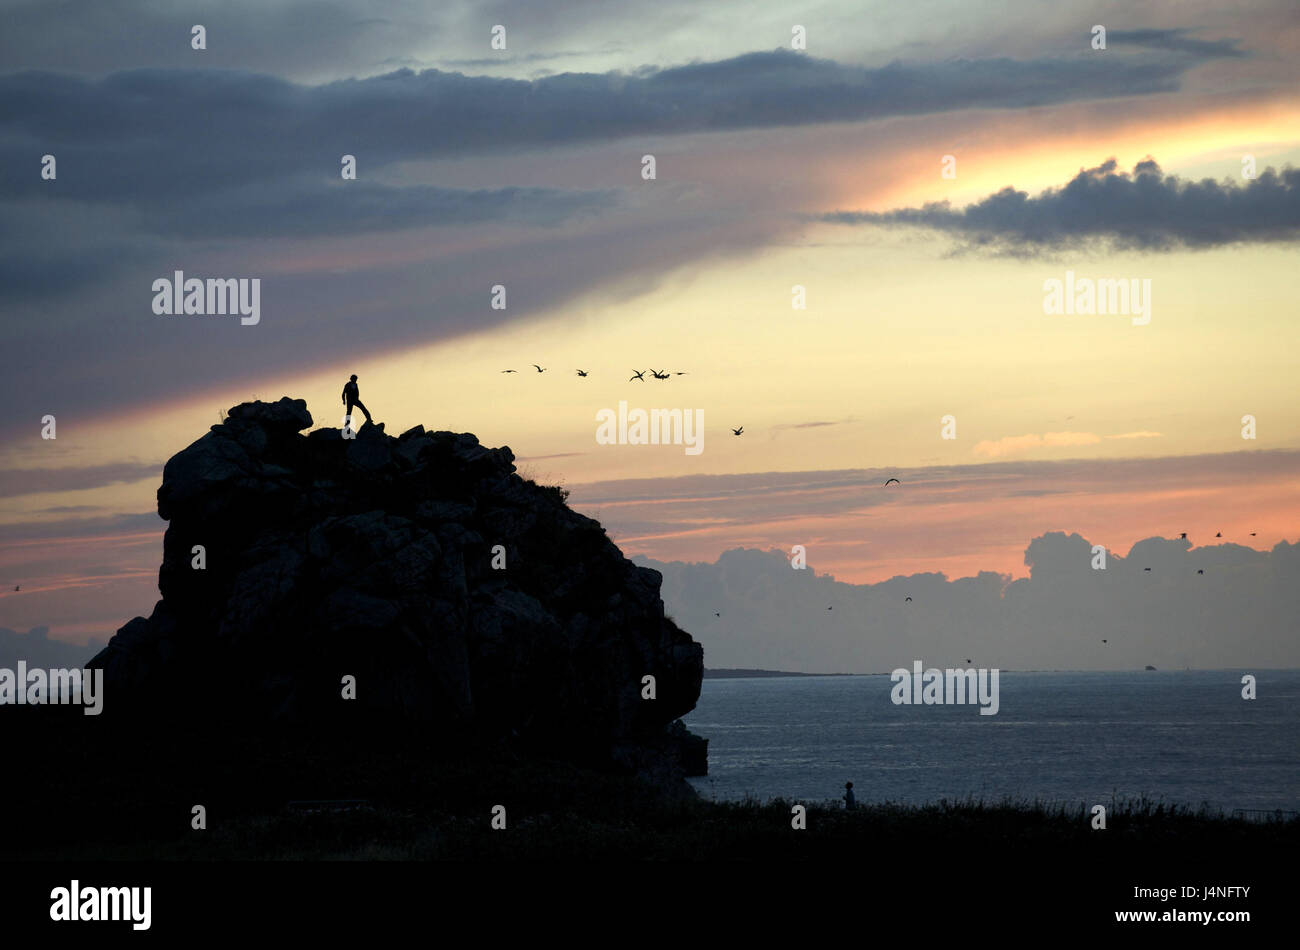 France, Brittany, Primel-Tregastel, bile coast, rock, silhouette, man, evening tuning, Stock Photo